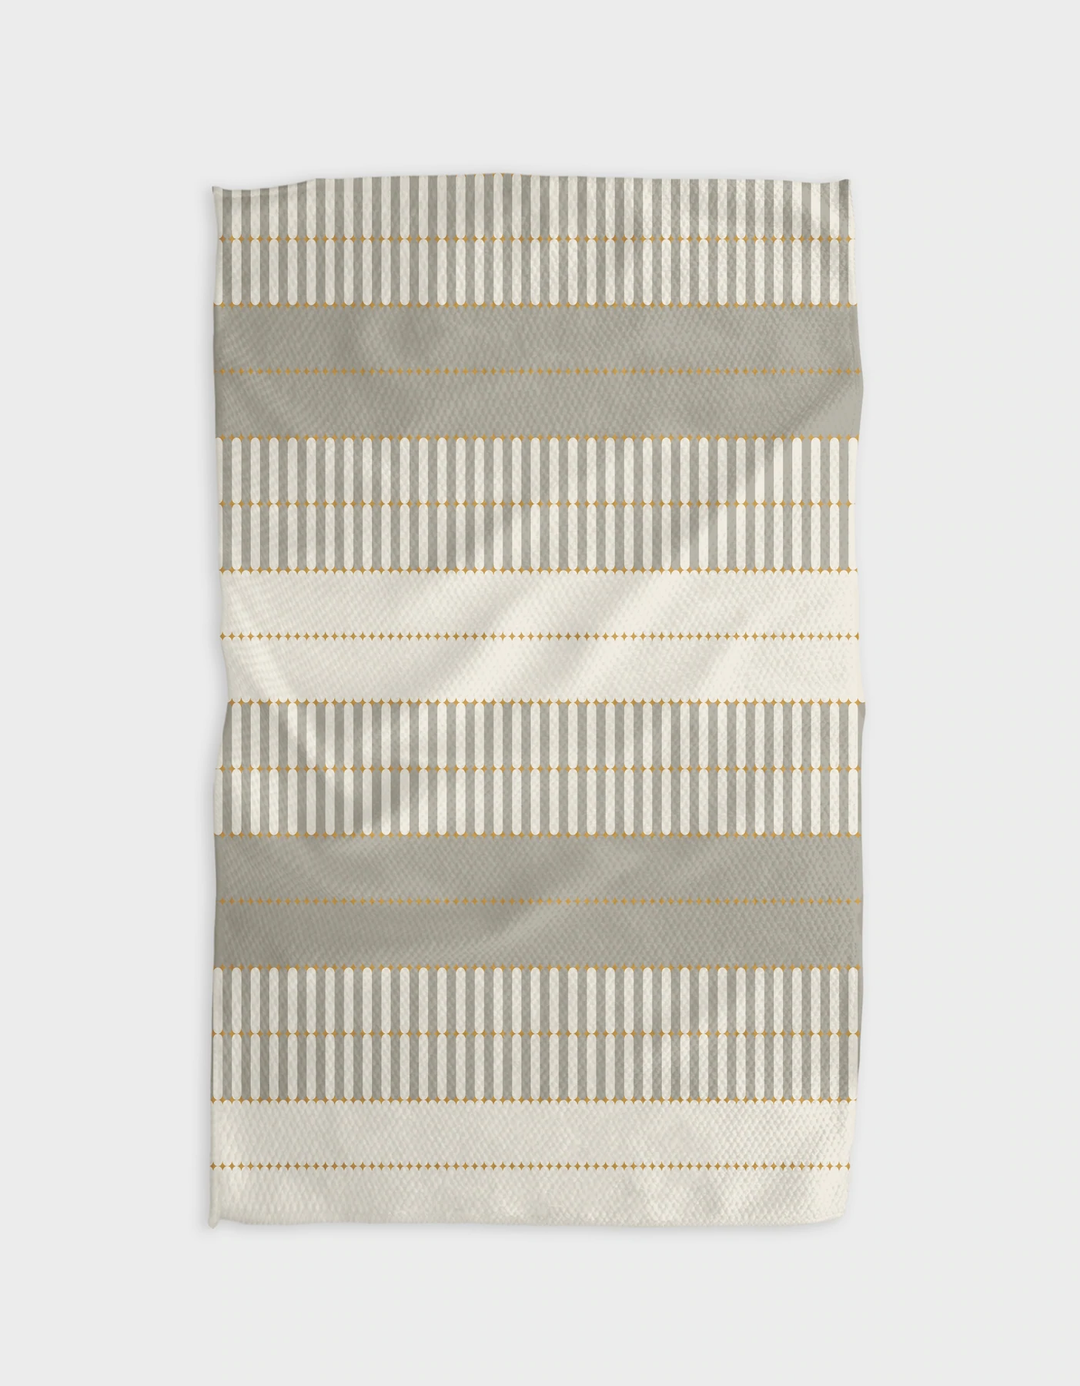 Geometry - Baton D'Or Tea Towel